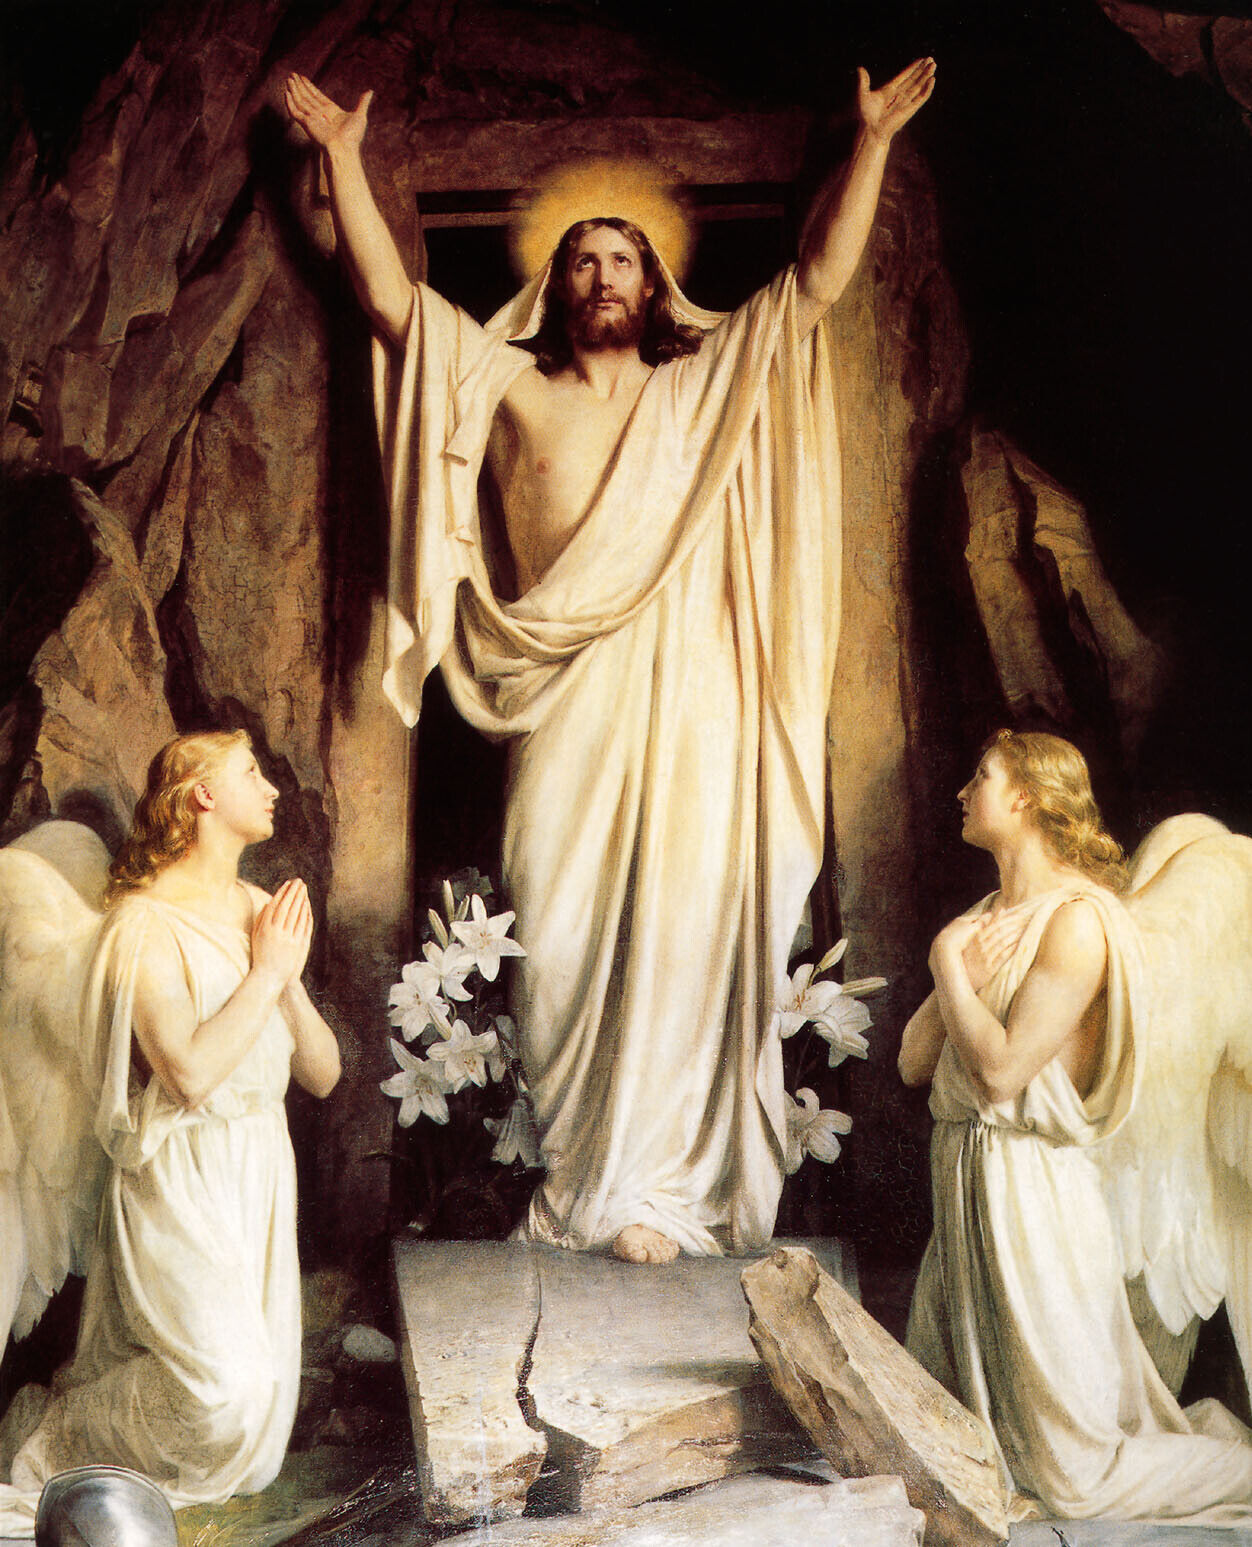 JESUS CHRIST EASTER RESURRECTION 8X10 PHOTO PICTURE CHRISTIAN ART